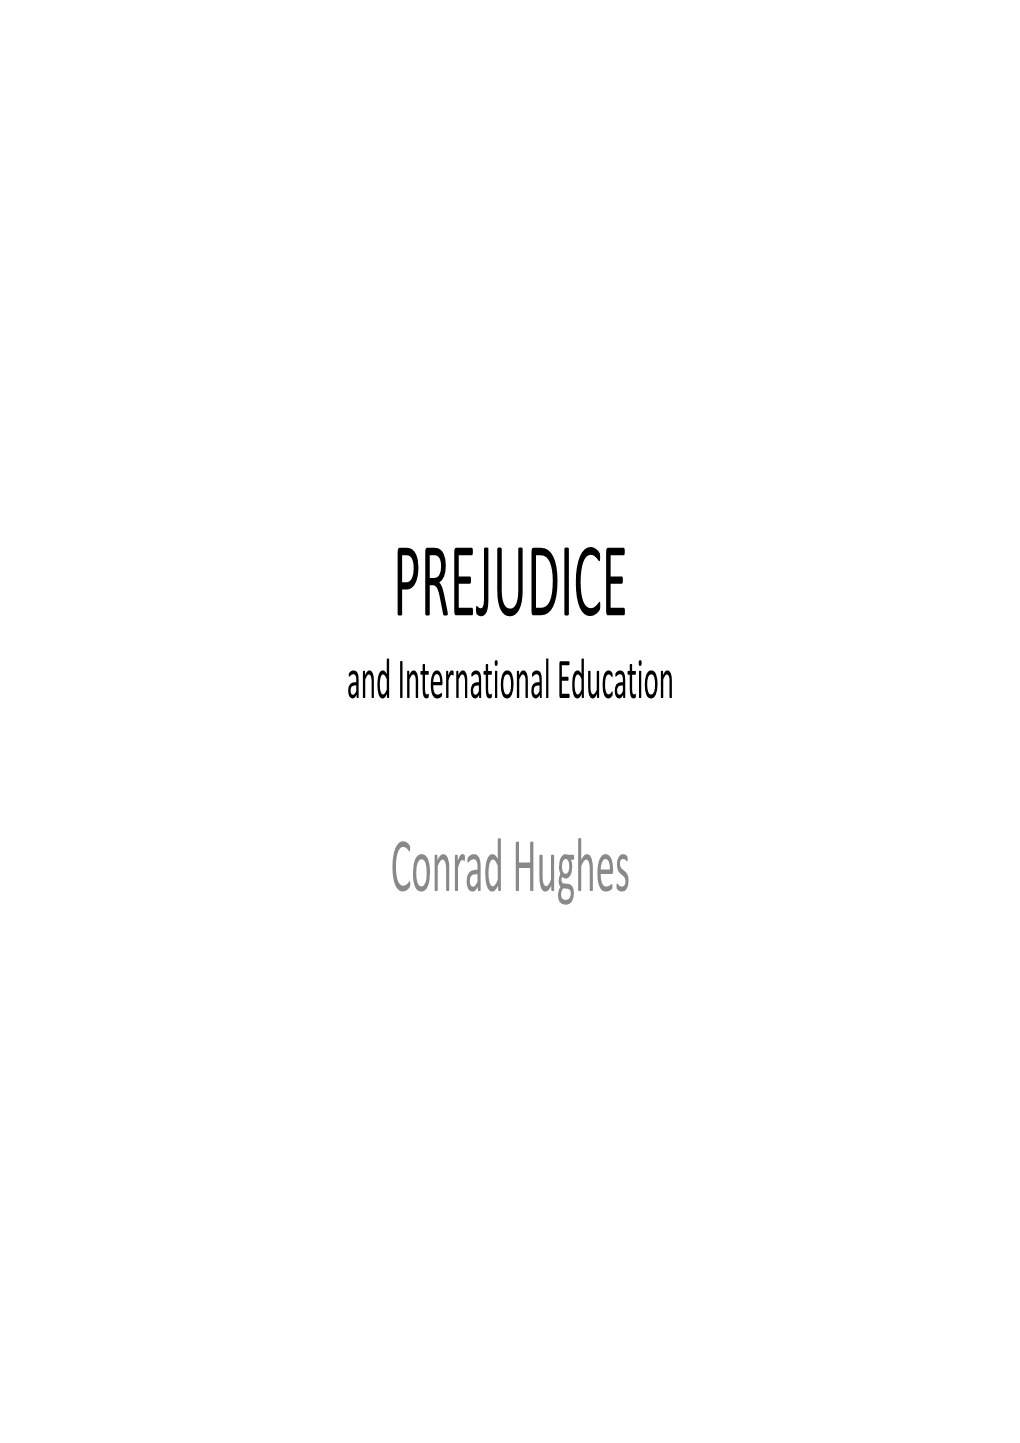 PREJUDICE and International Education